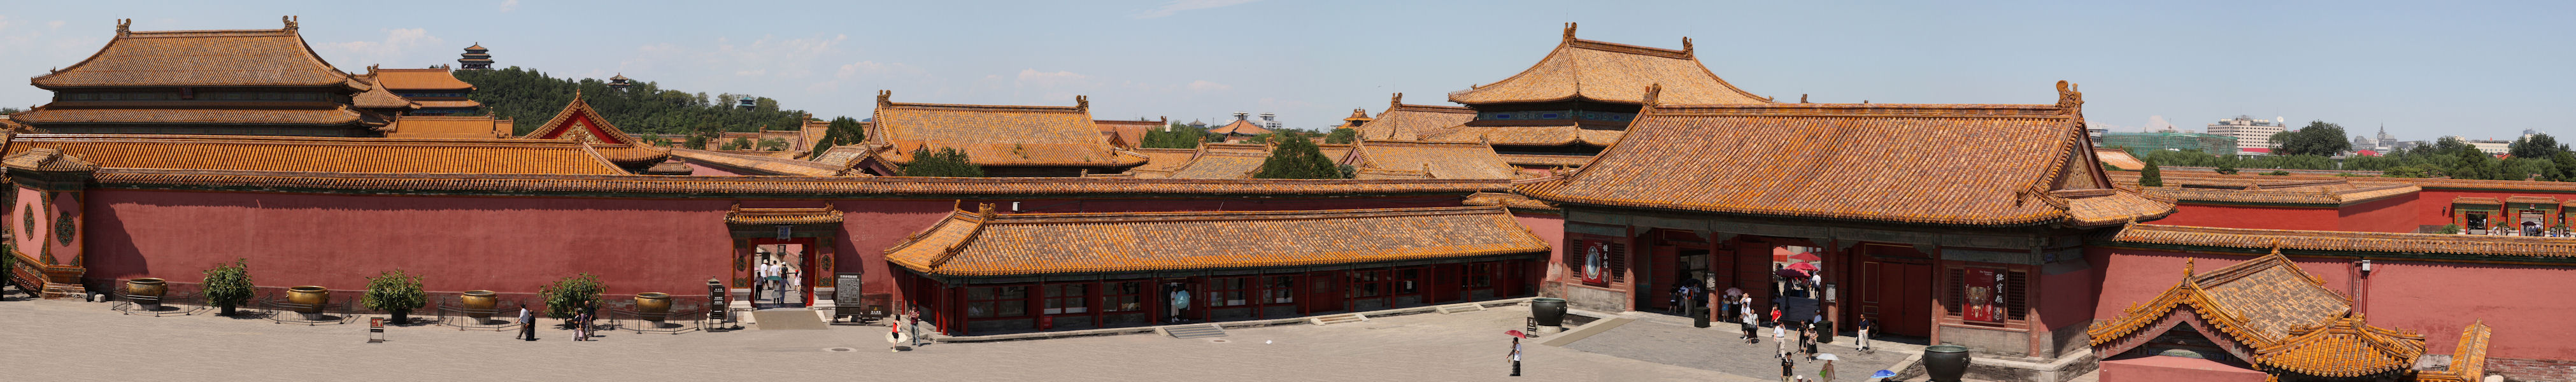 Panorama inside the Forbidden City